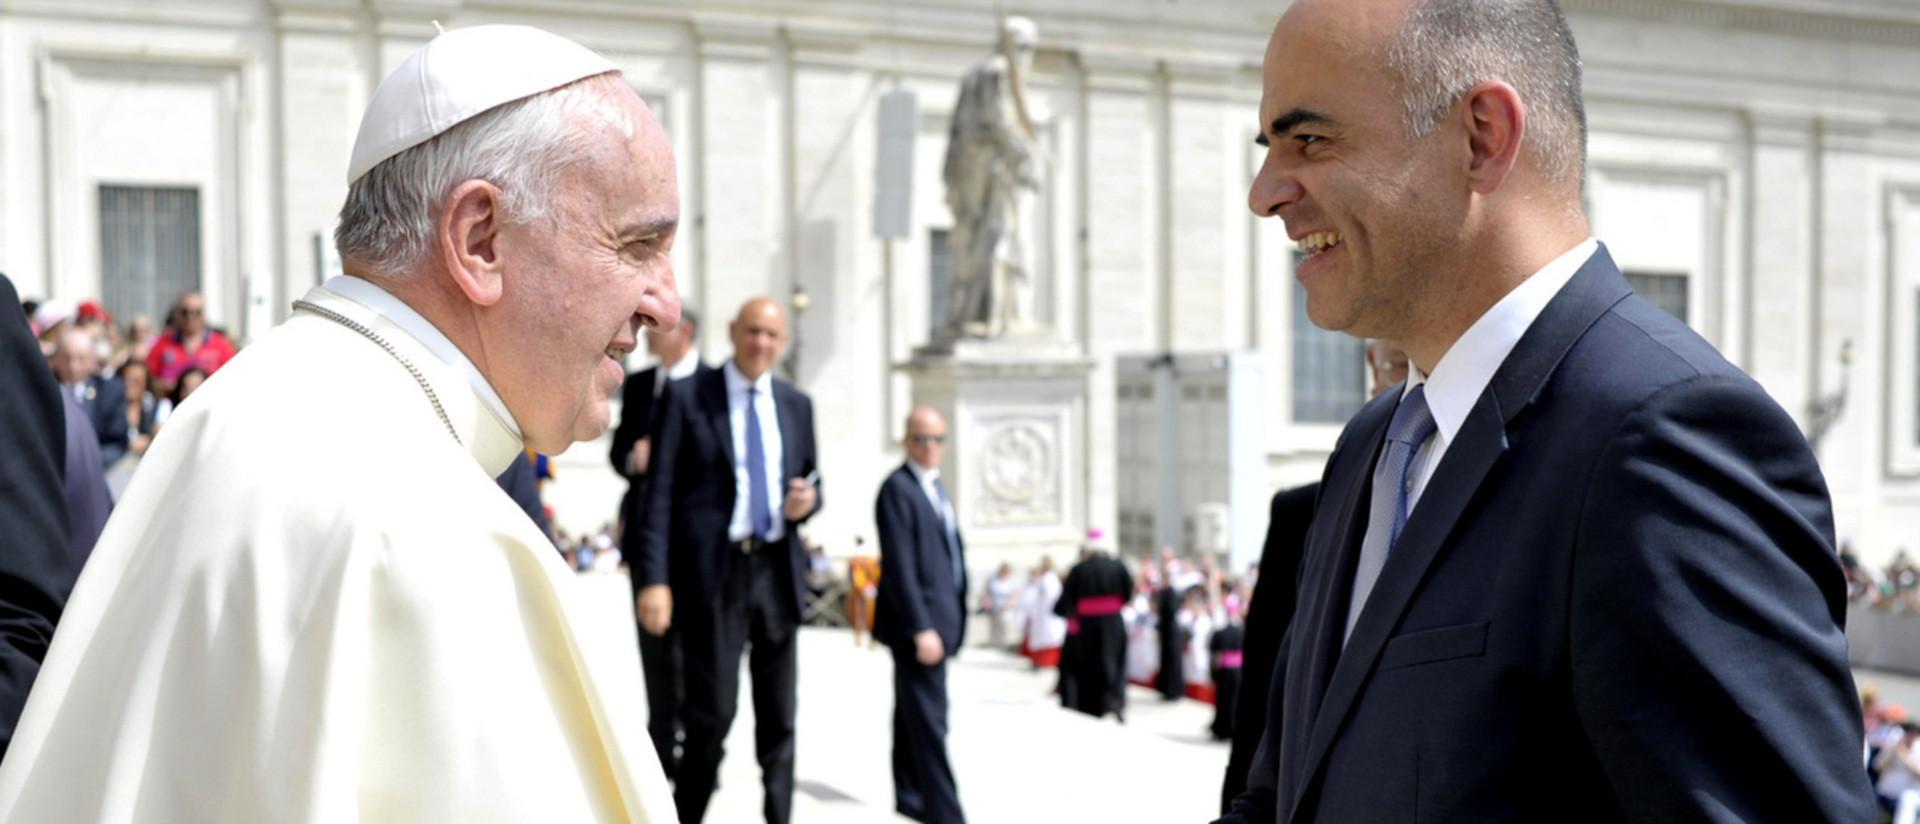 Bundesrat Berset und Papst Franziskus, November 2018 im Vatikan.